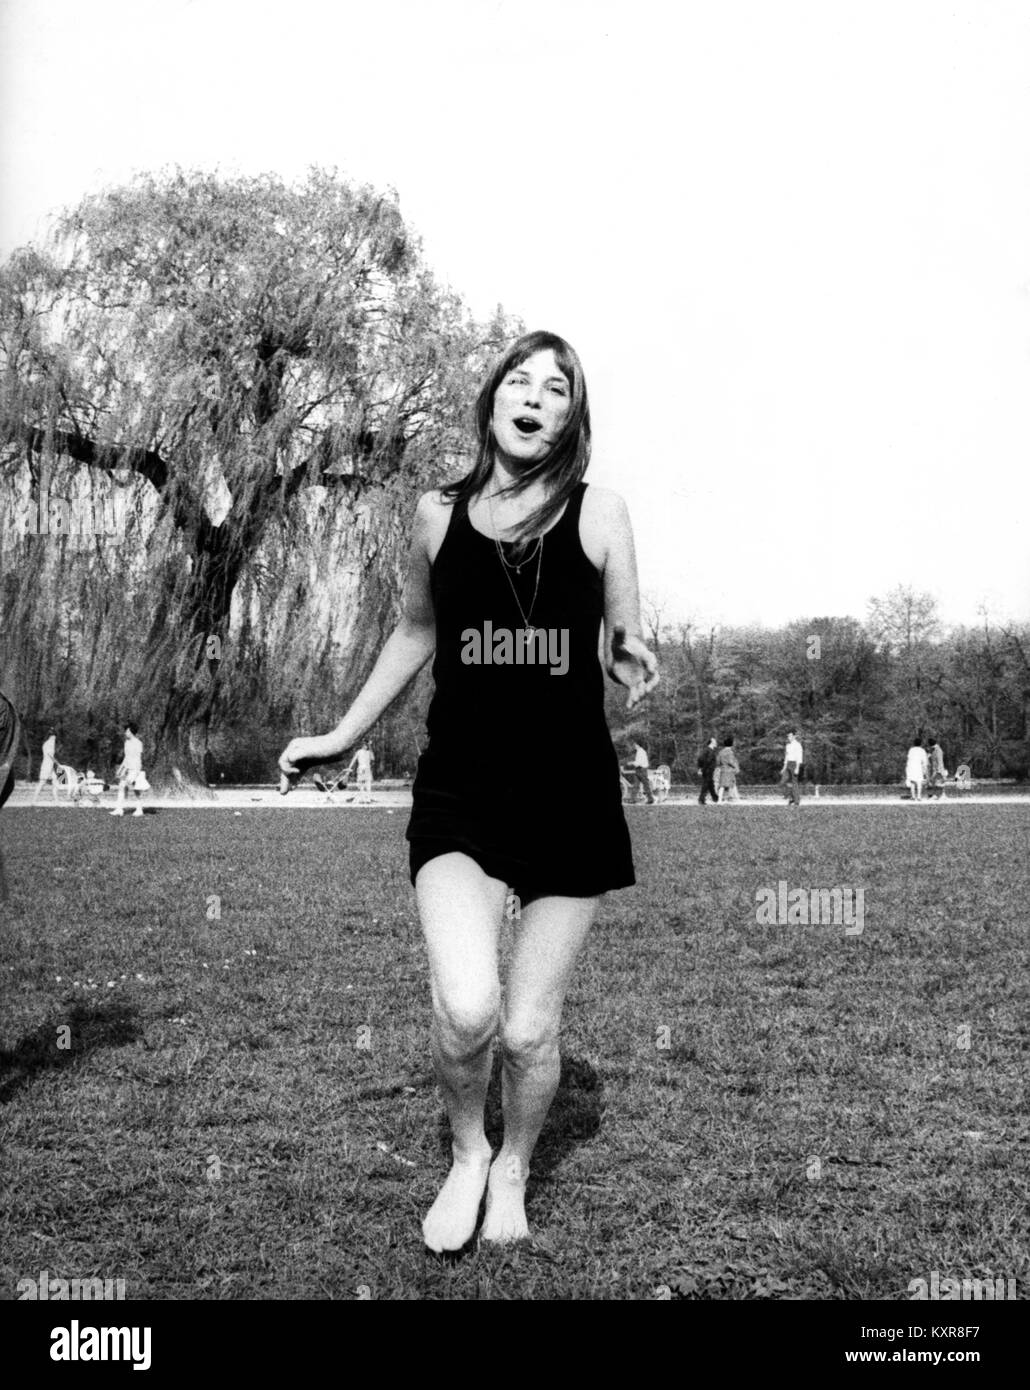 Jane Birkin - Melody Nelson, 1971, Black & White fashion, GAMMA AGENCY ·  Art photographs · YellowKorner